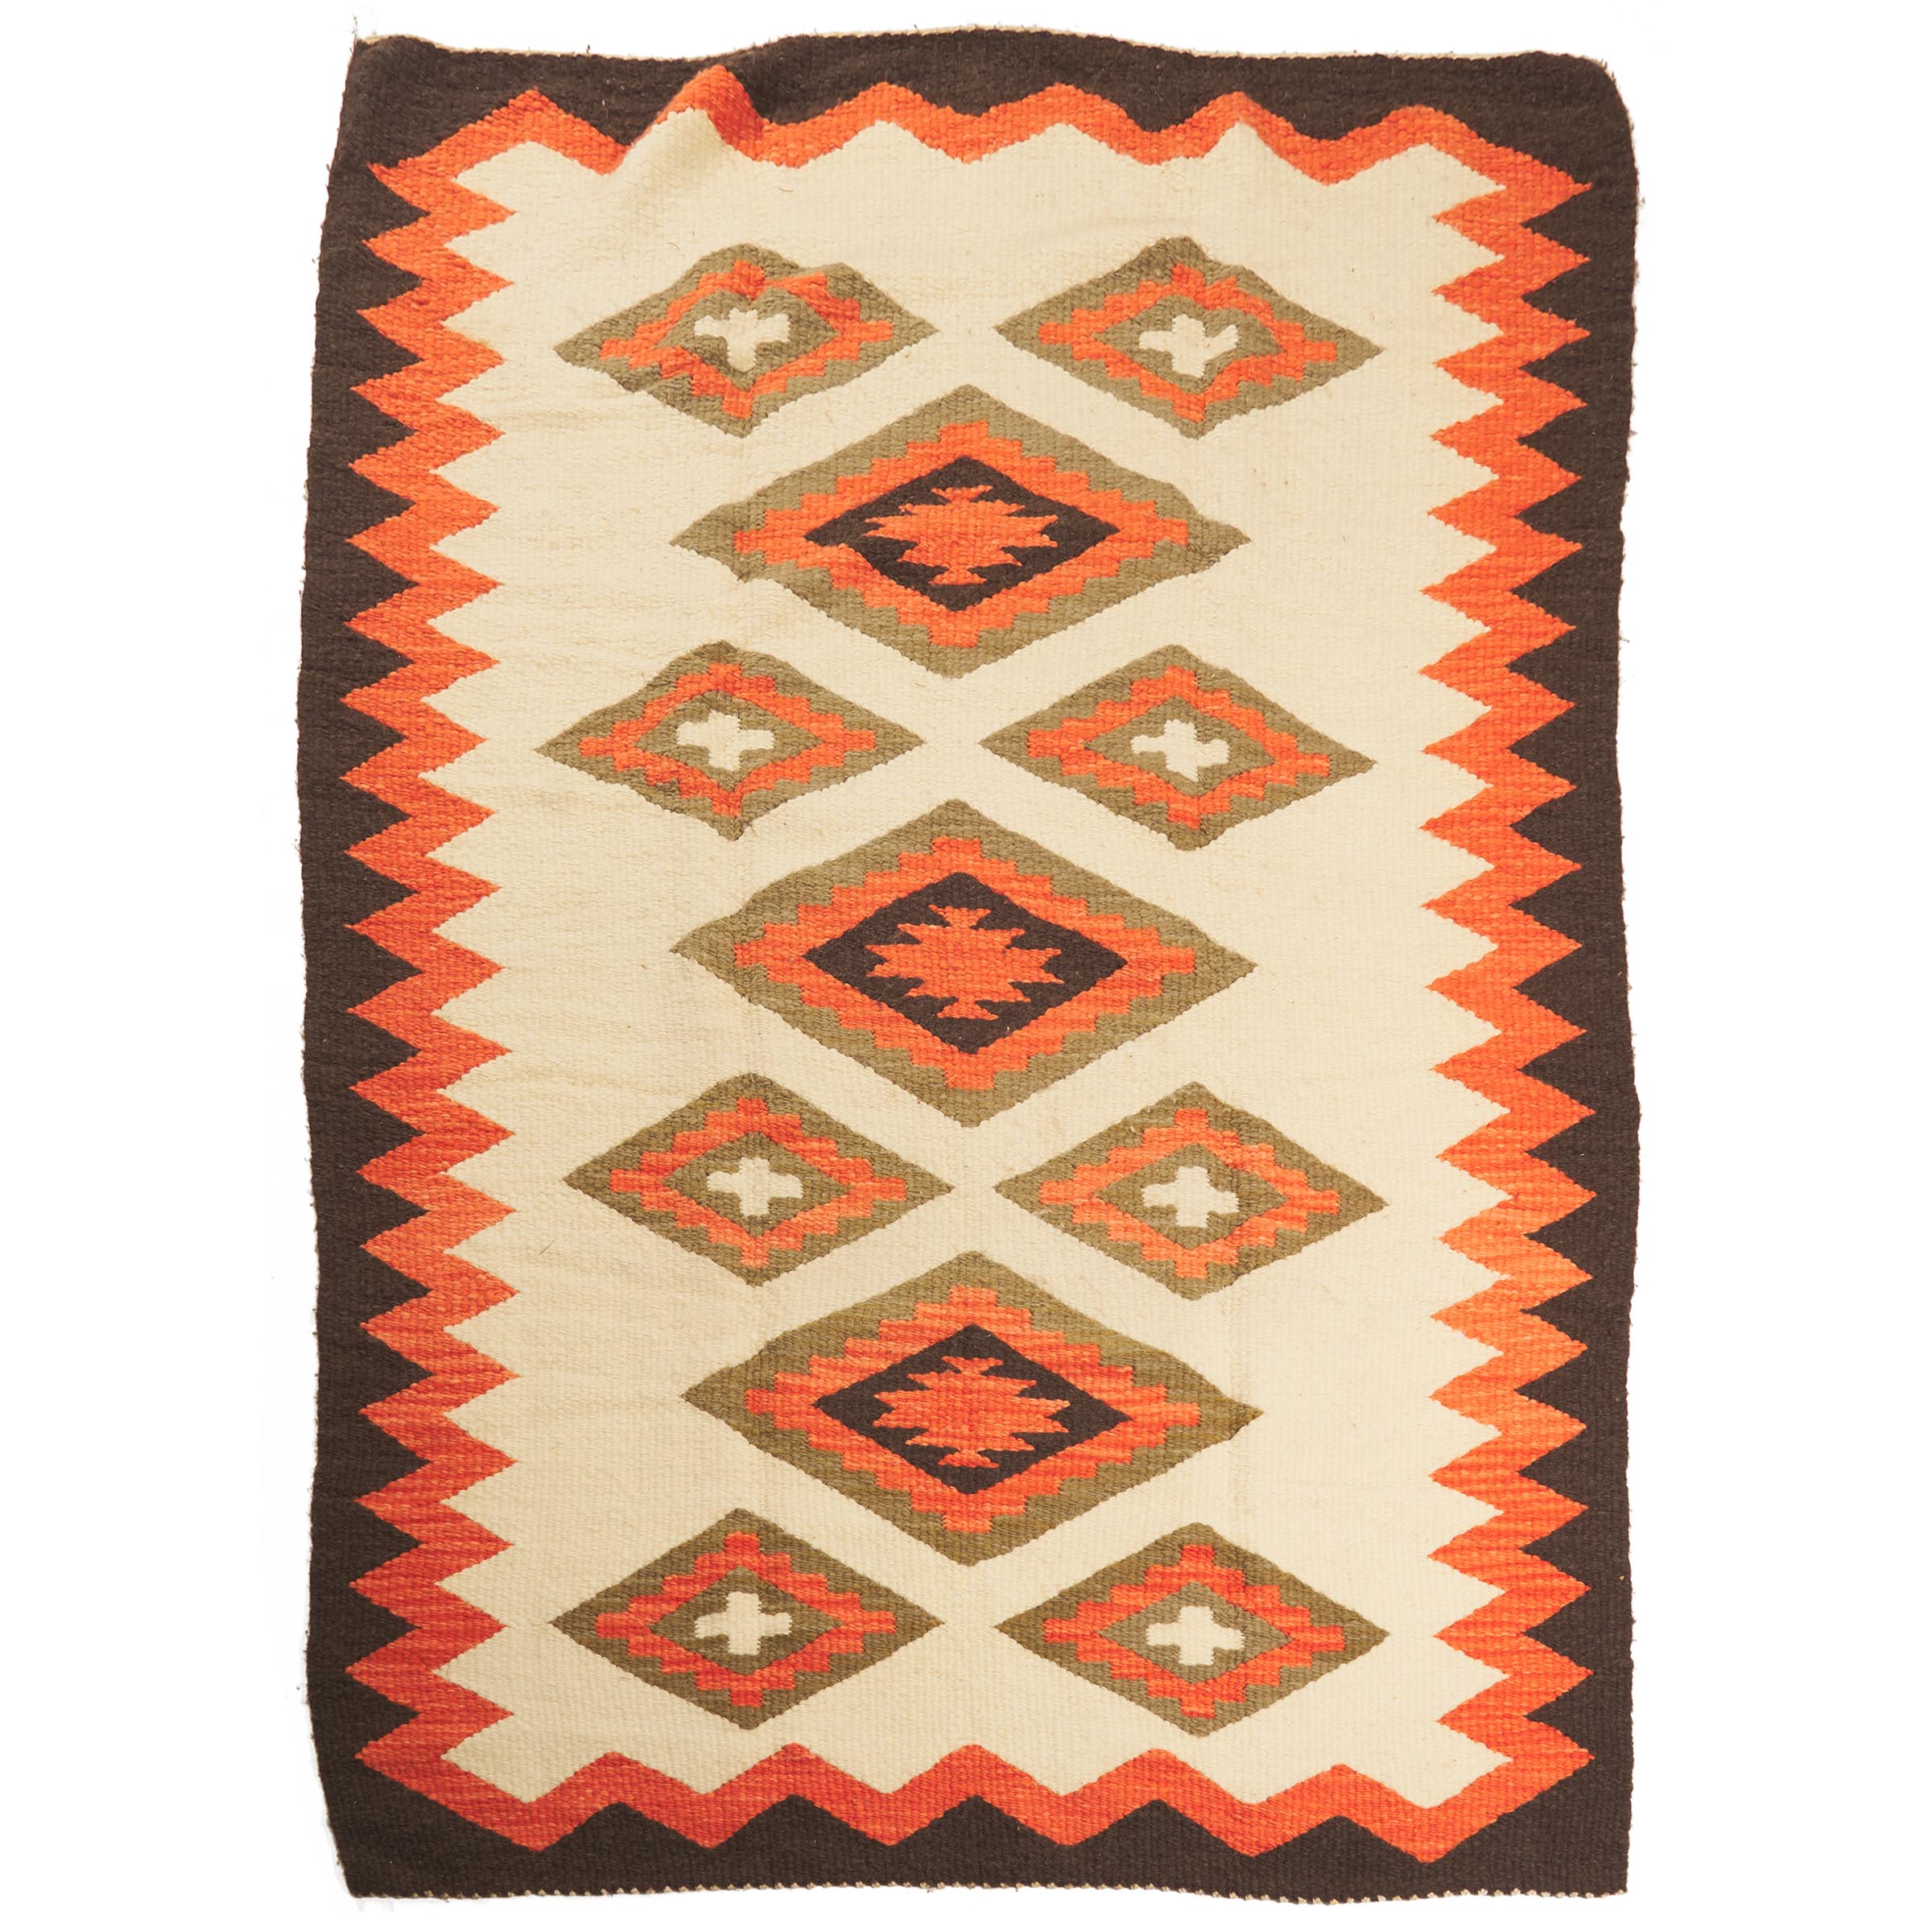 Navajo Blanket, mid 20th century